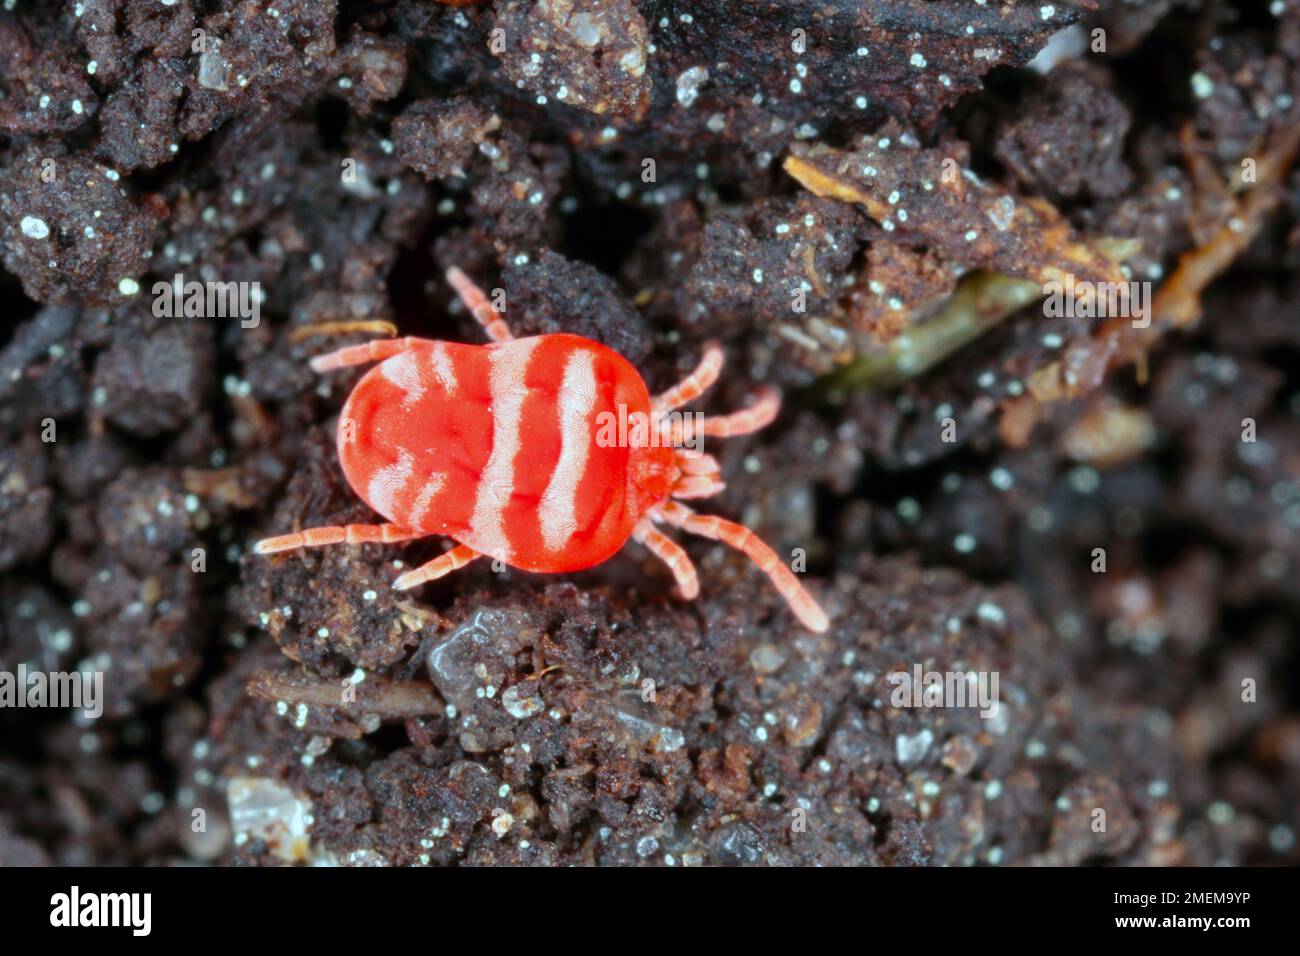 Red Velvet Mite or Rain Bug (Trombidiidae) walking on the ground. Stock Photo